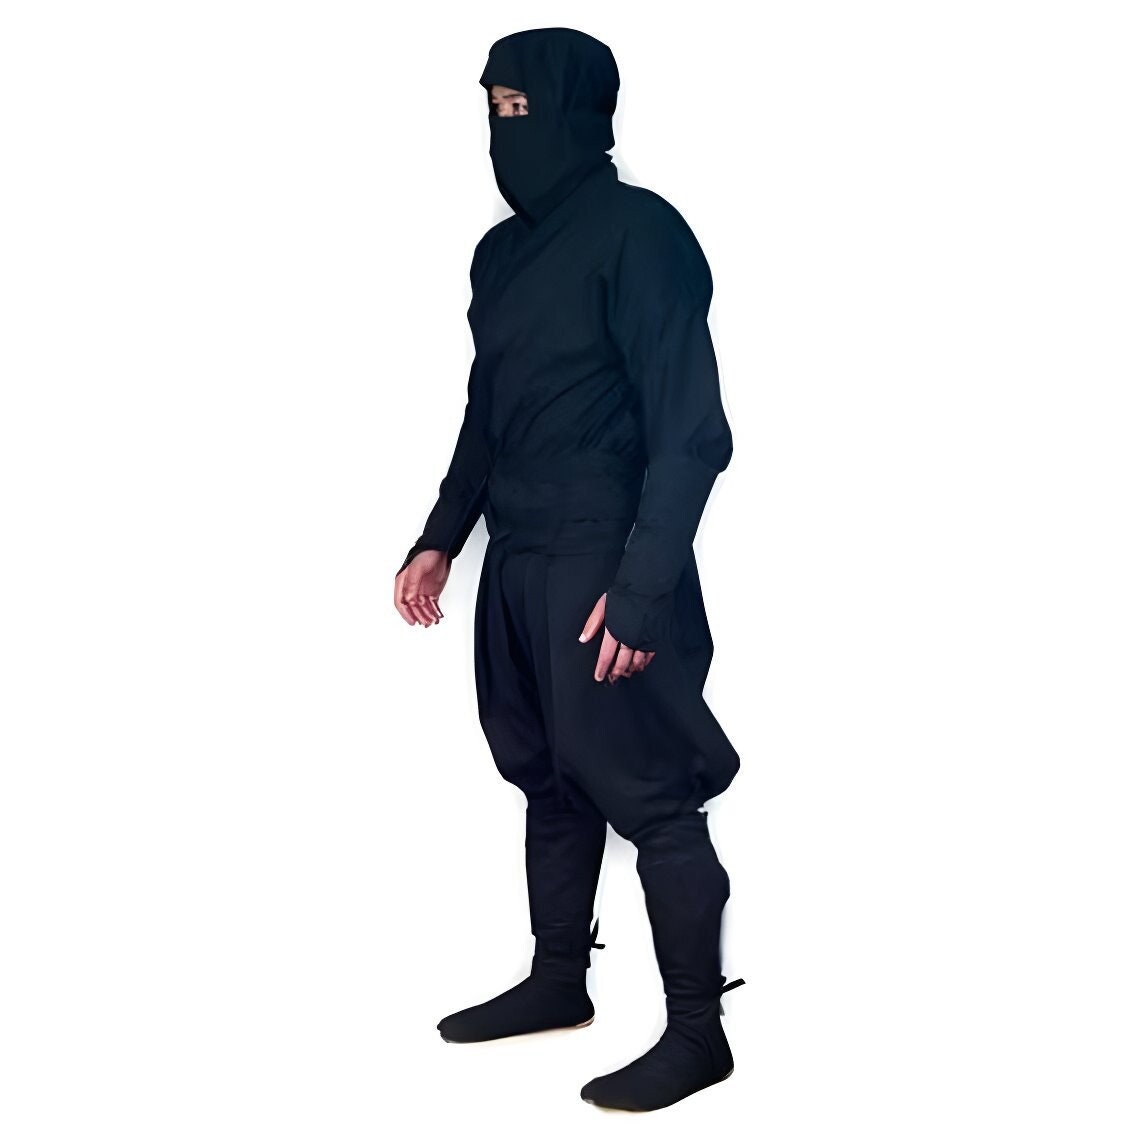 Shinobi Shozoku Authentic Japanese Outfit Ninja Costume, Bujinkan